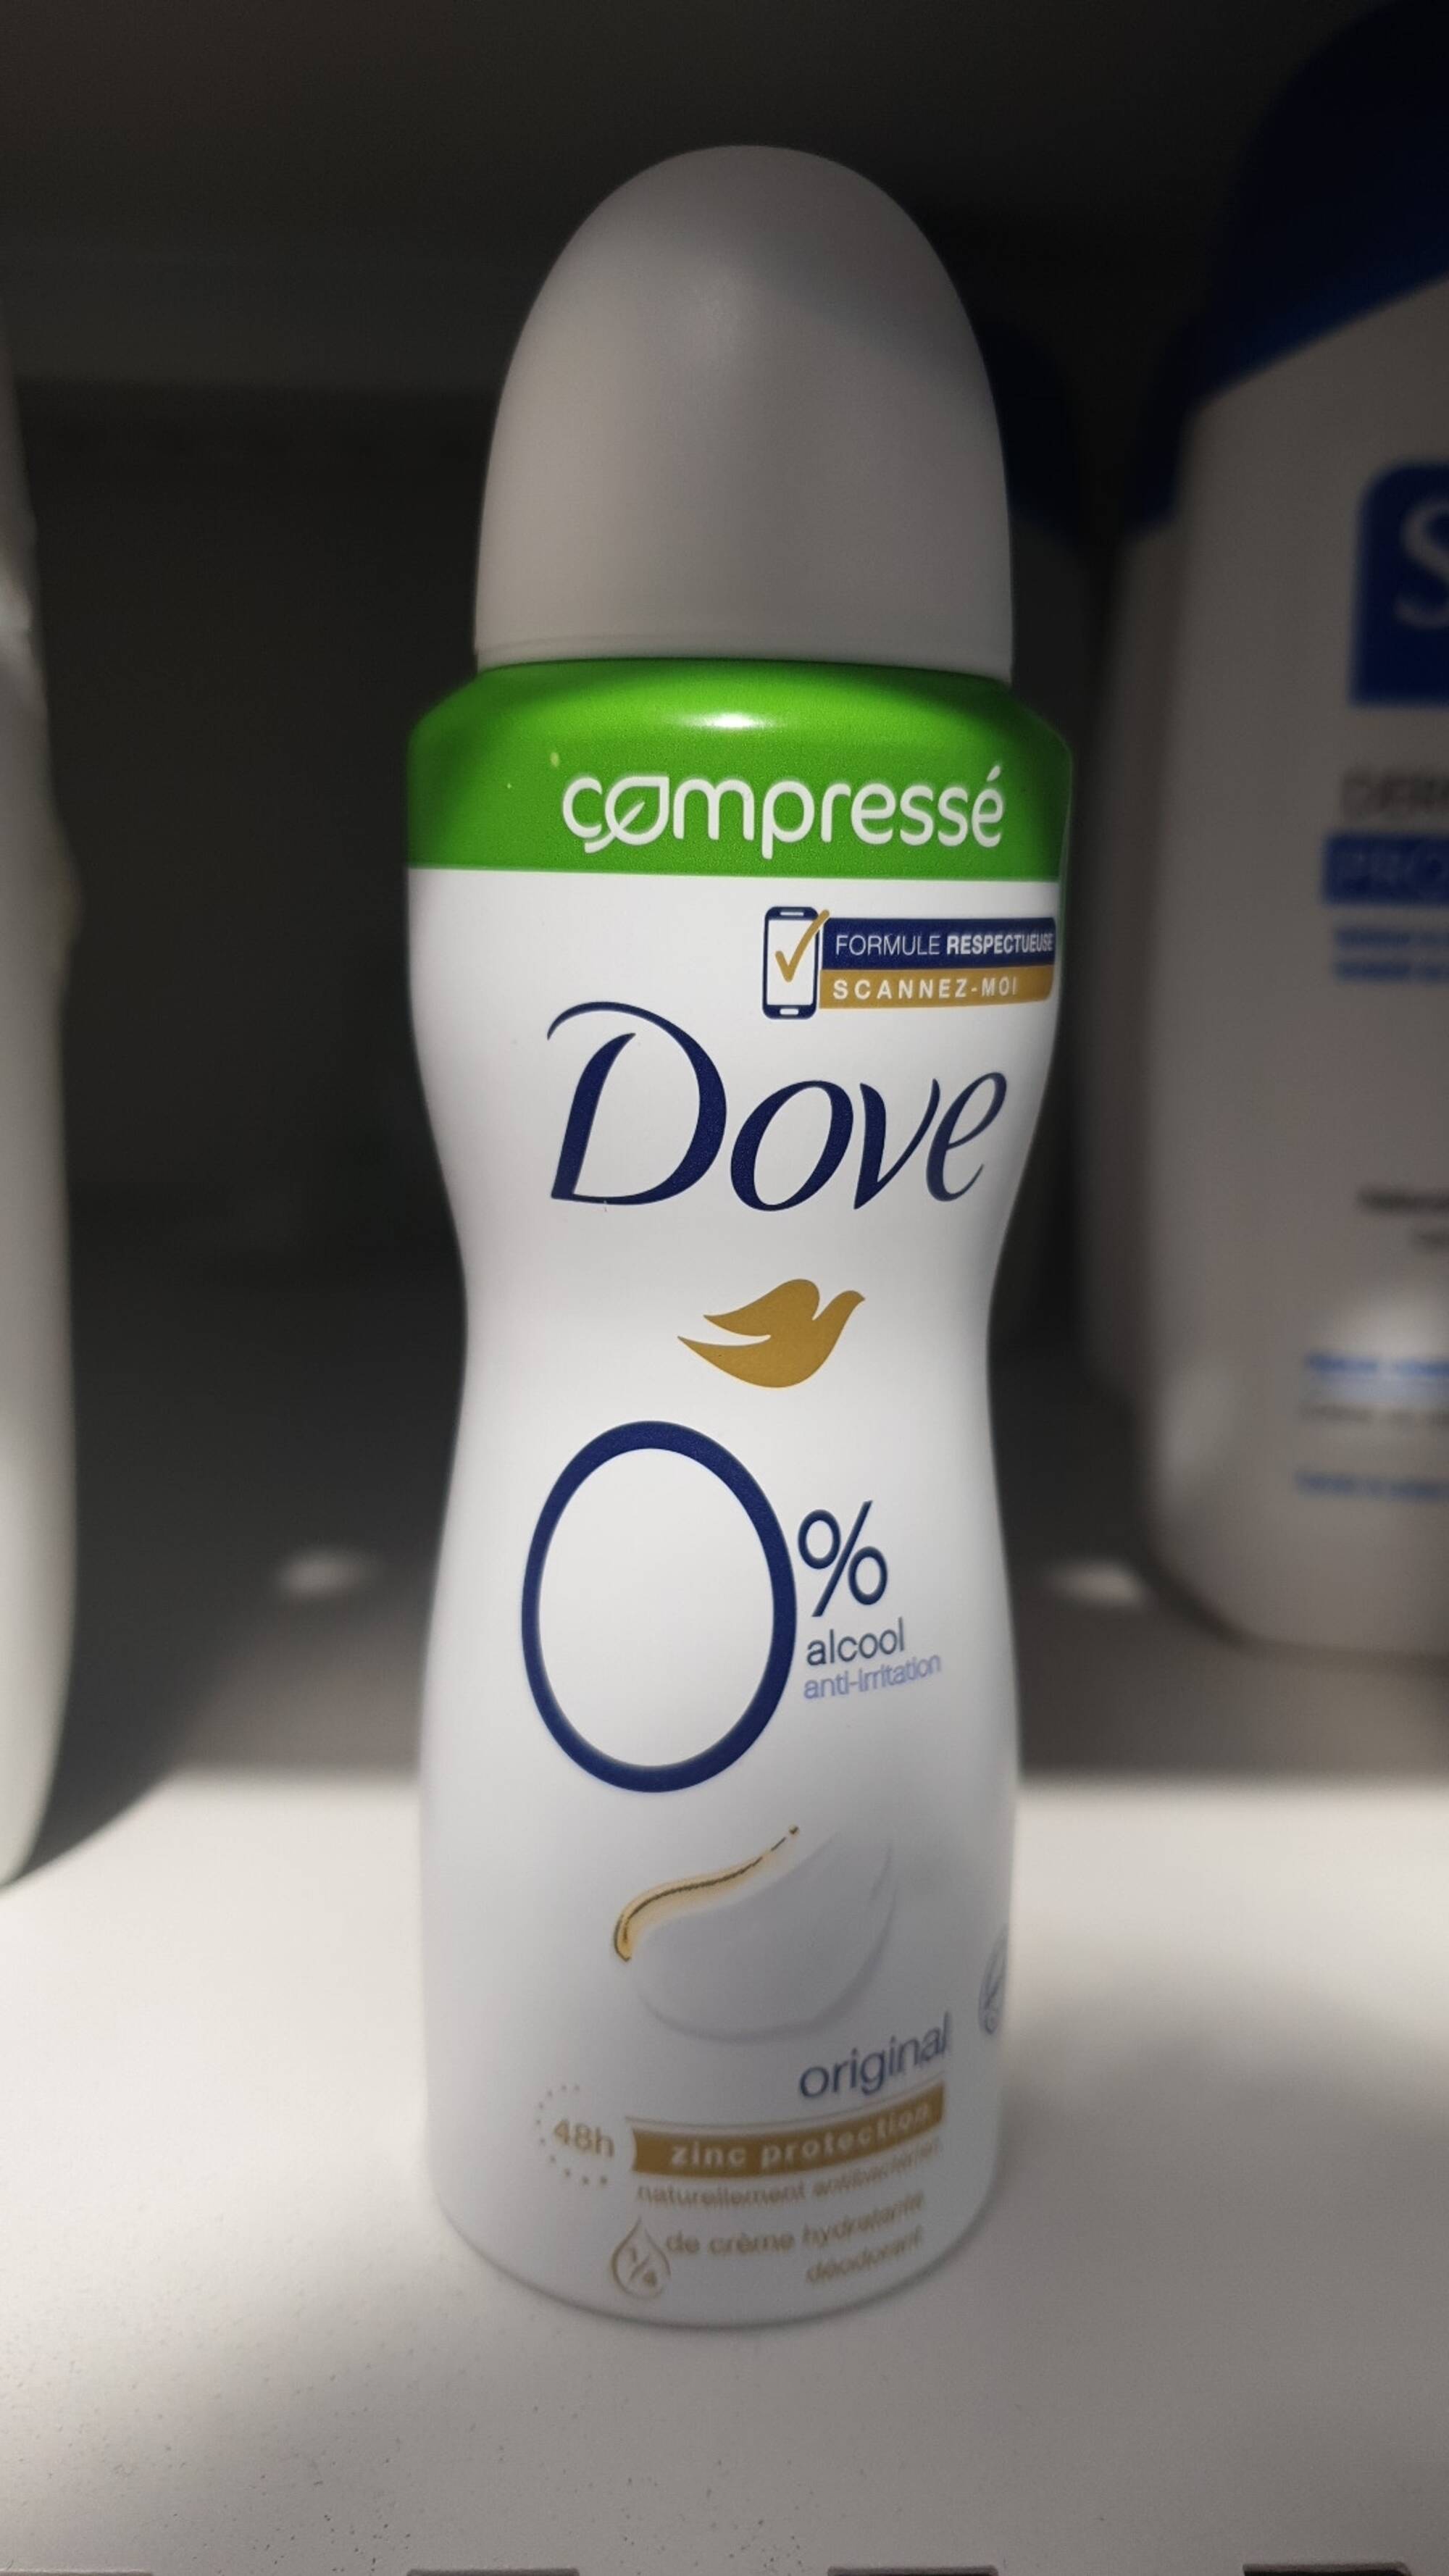 DOVE - 0% Alcool original - Déodorant 48h